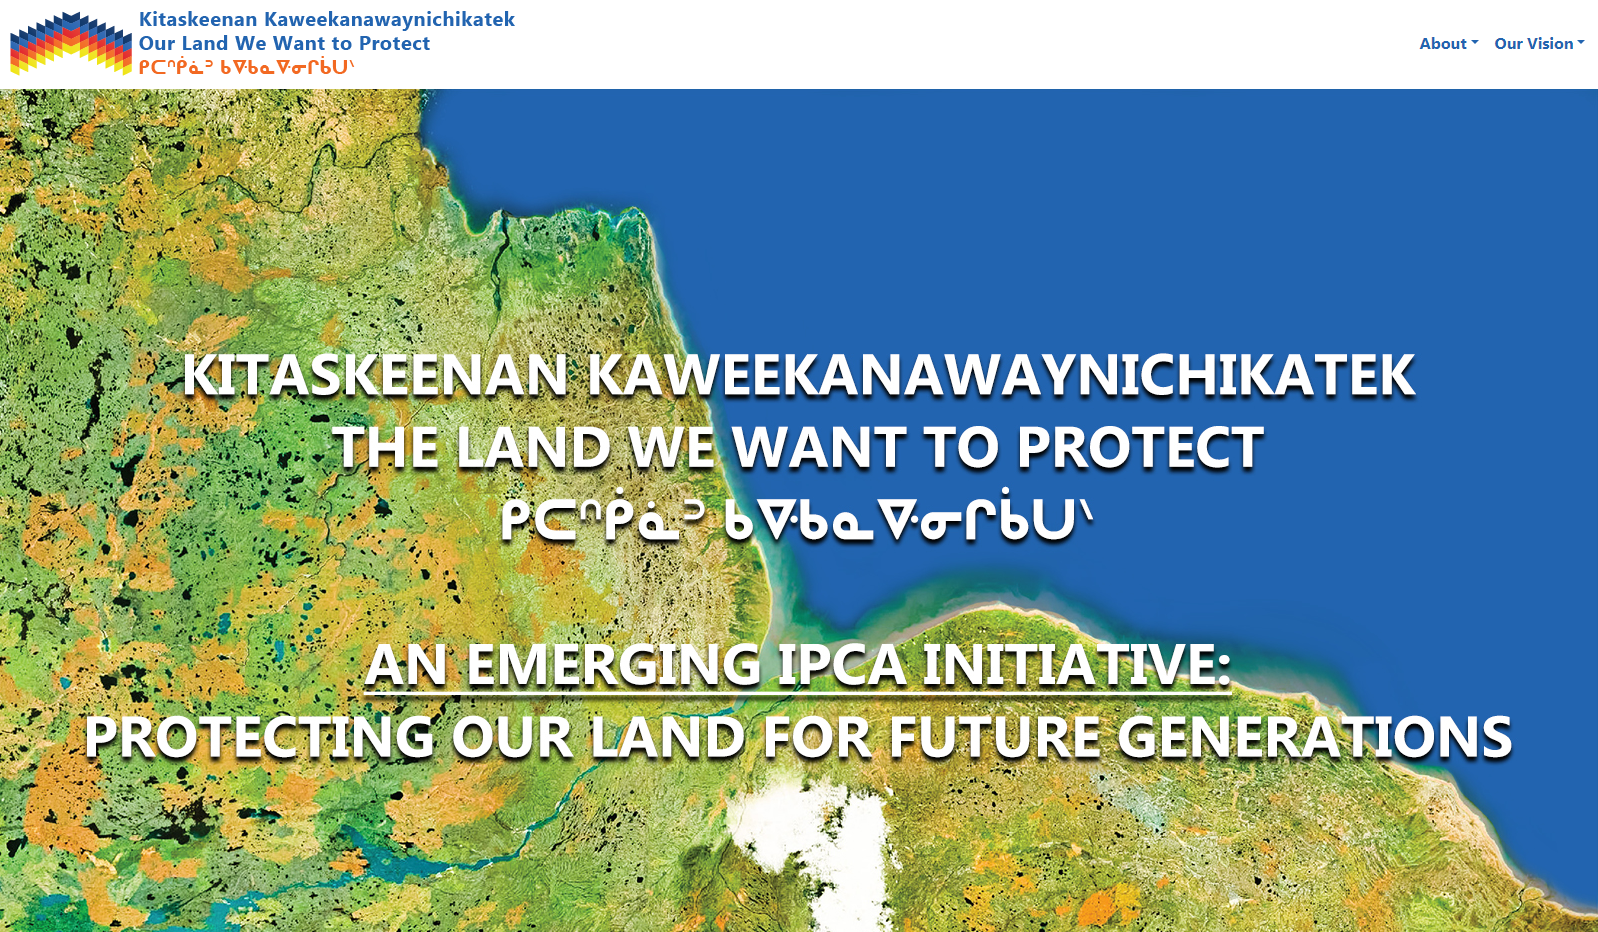 A satellite image of a coastline is superimposed by the Kitaskeenan Kaweekanawaynichikatek title in English and in Indigenous characters.